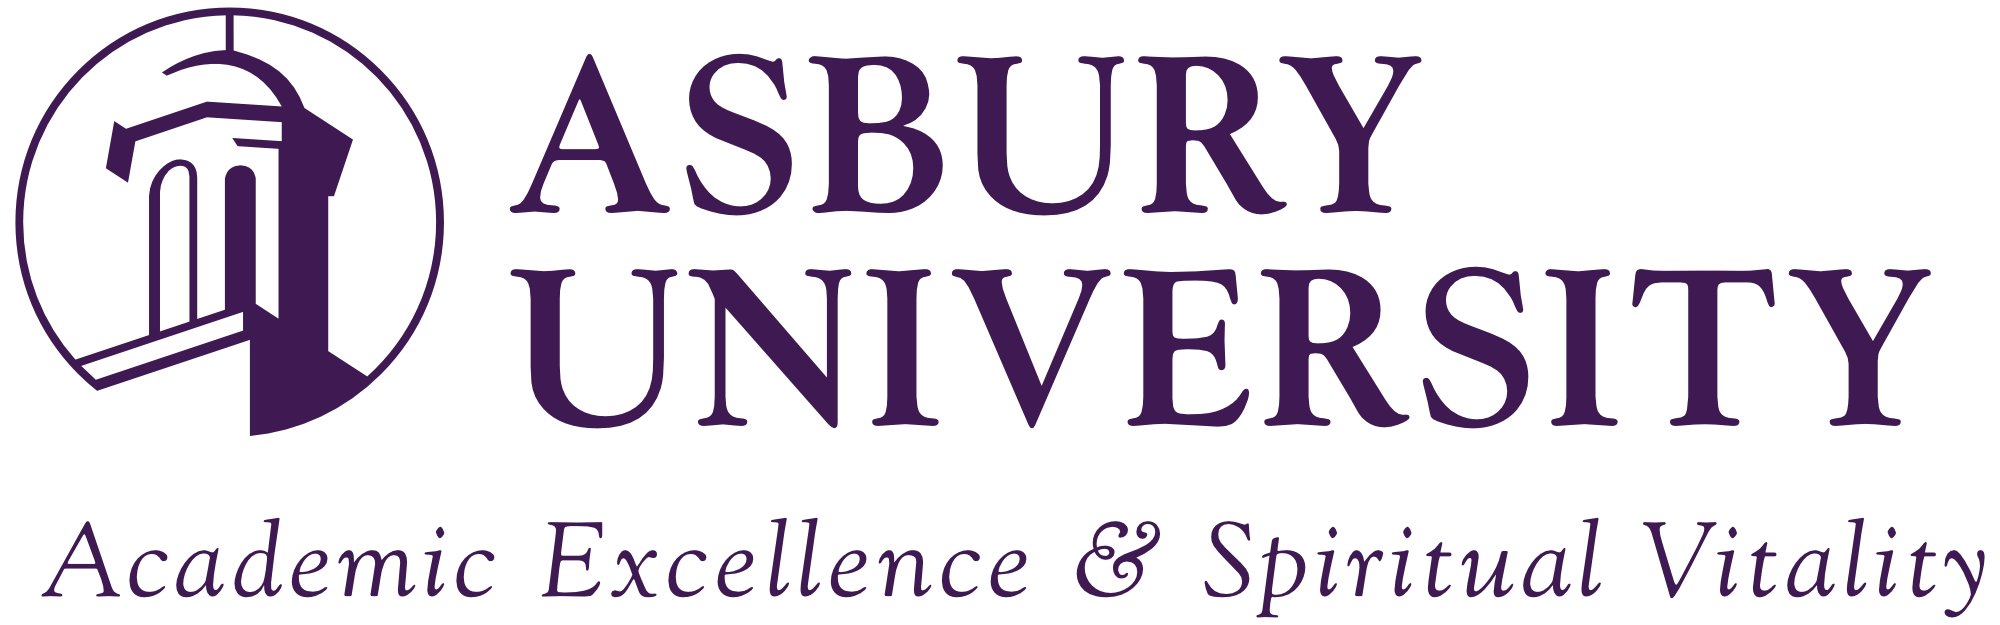 Asbury University Logo Config 3